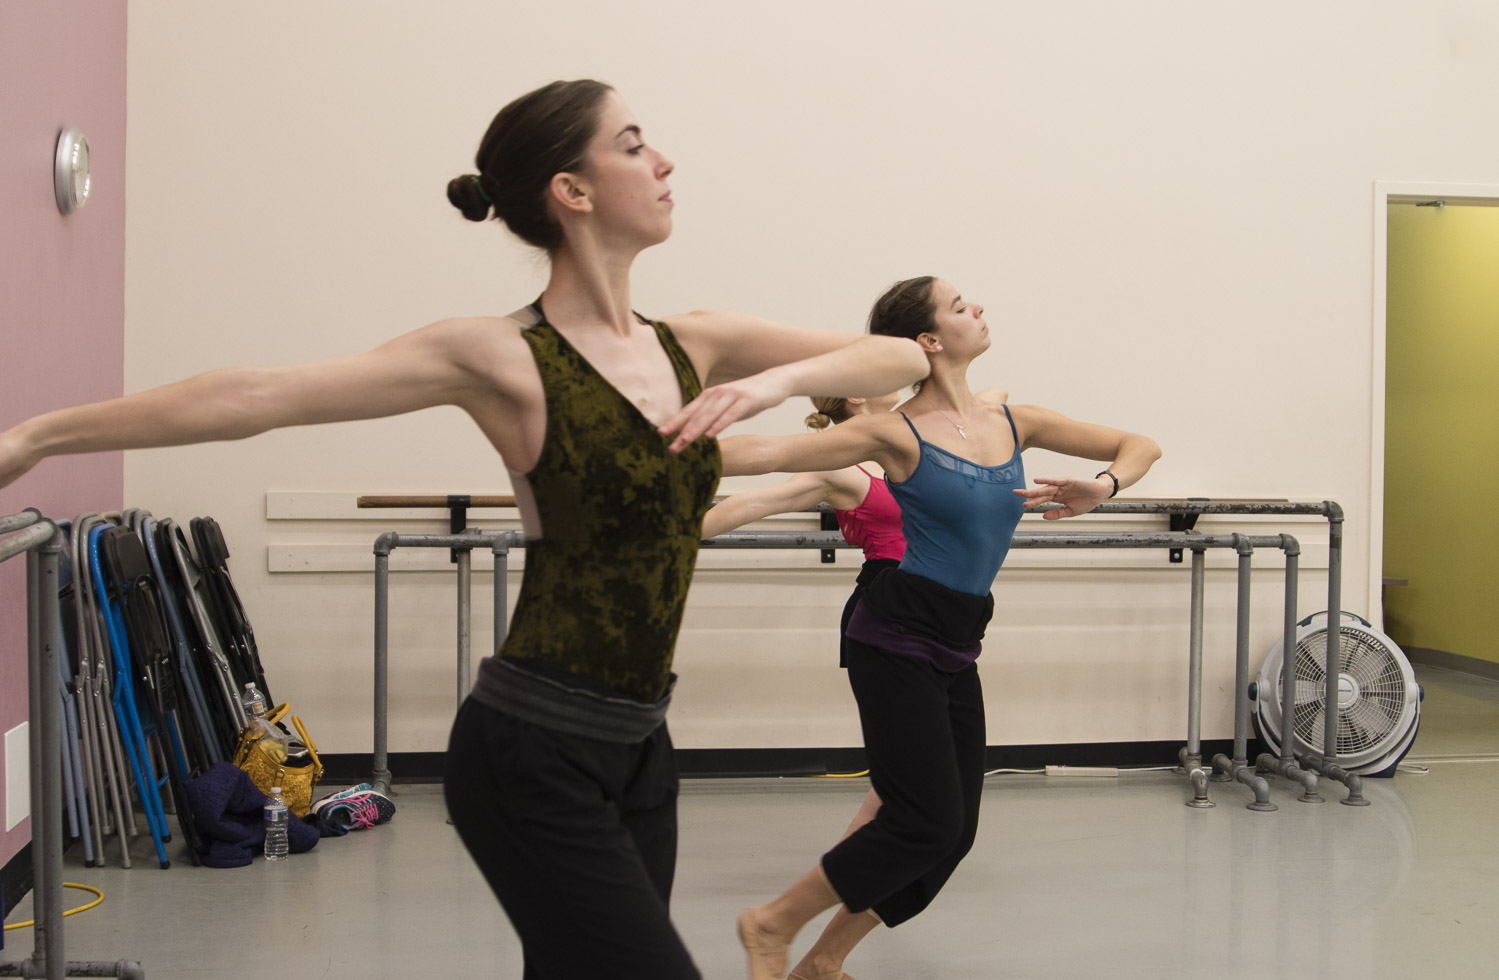  Bowen McCauley Dance Co. rehearsal at MD Youth Ballet, November 29, 2016. Photo: John St Hilaire | Lightenough.com 